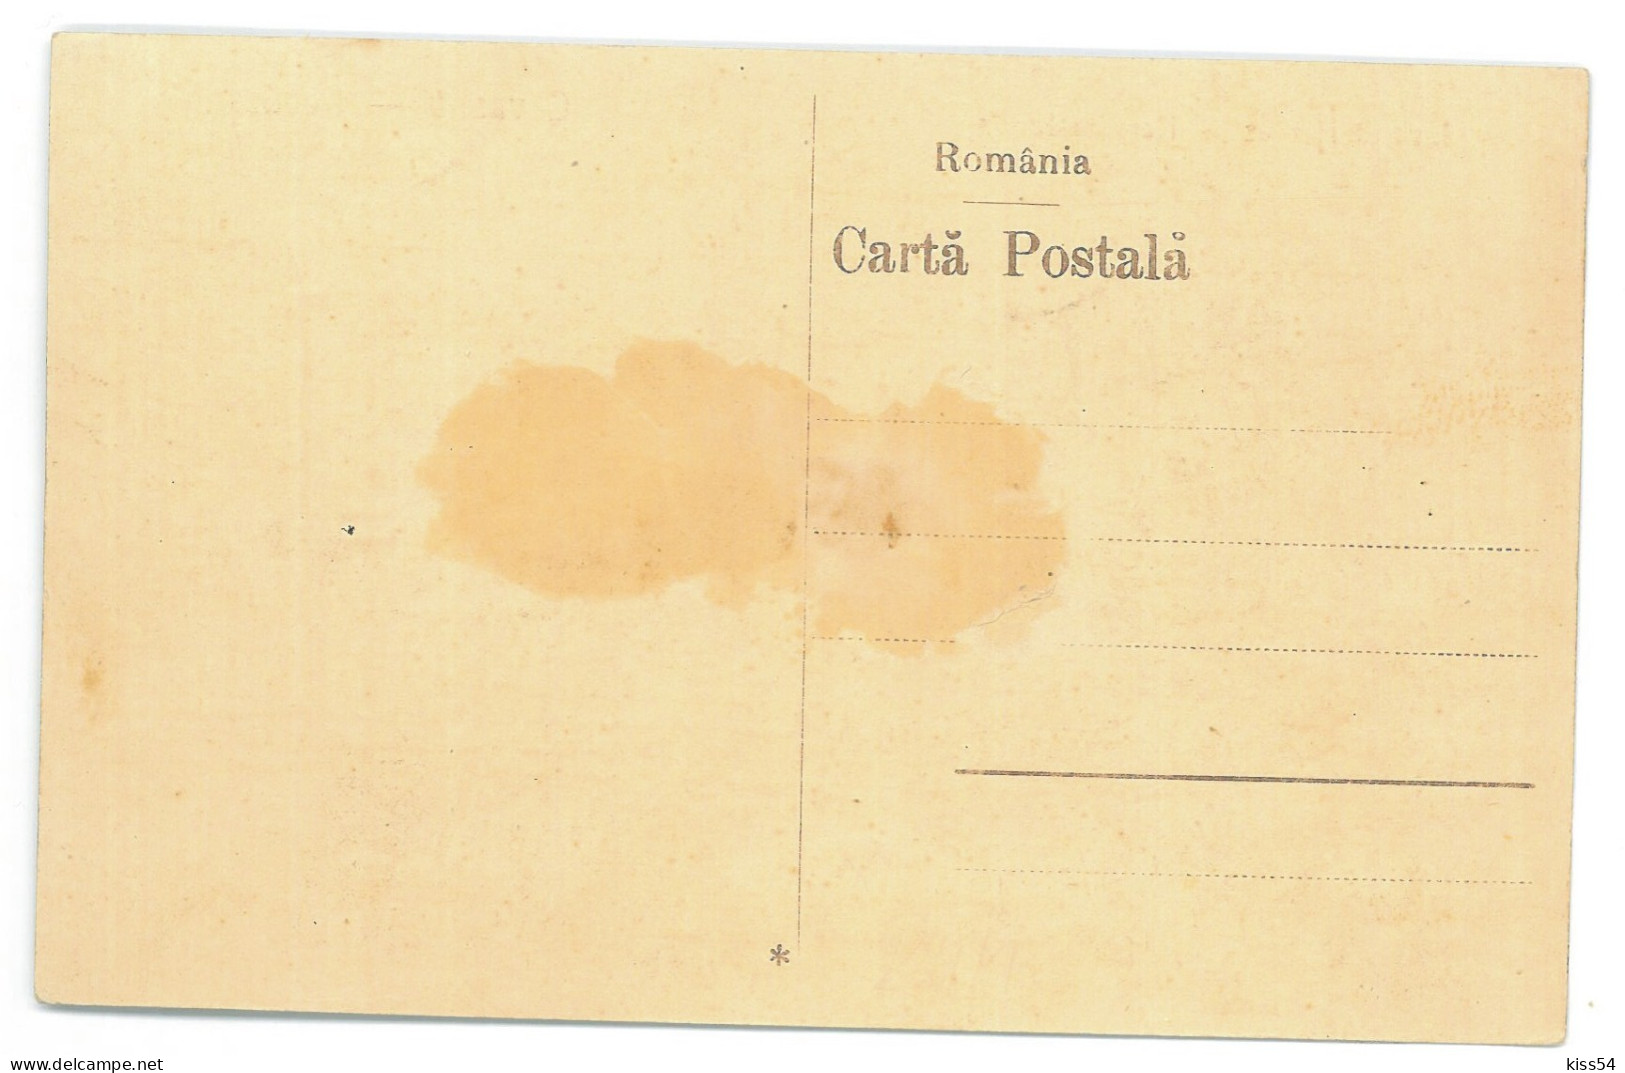 RO 38 - 25157 COVASNA, Izvorul Horgas, Romania - Old Postcard - Unused - Romania